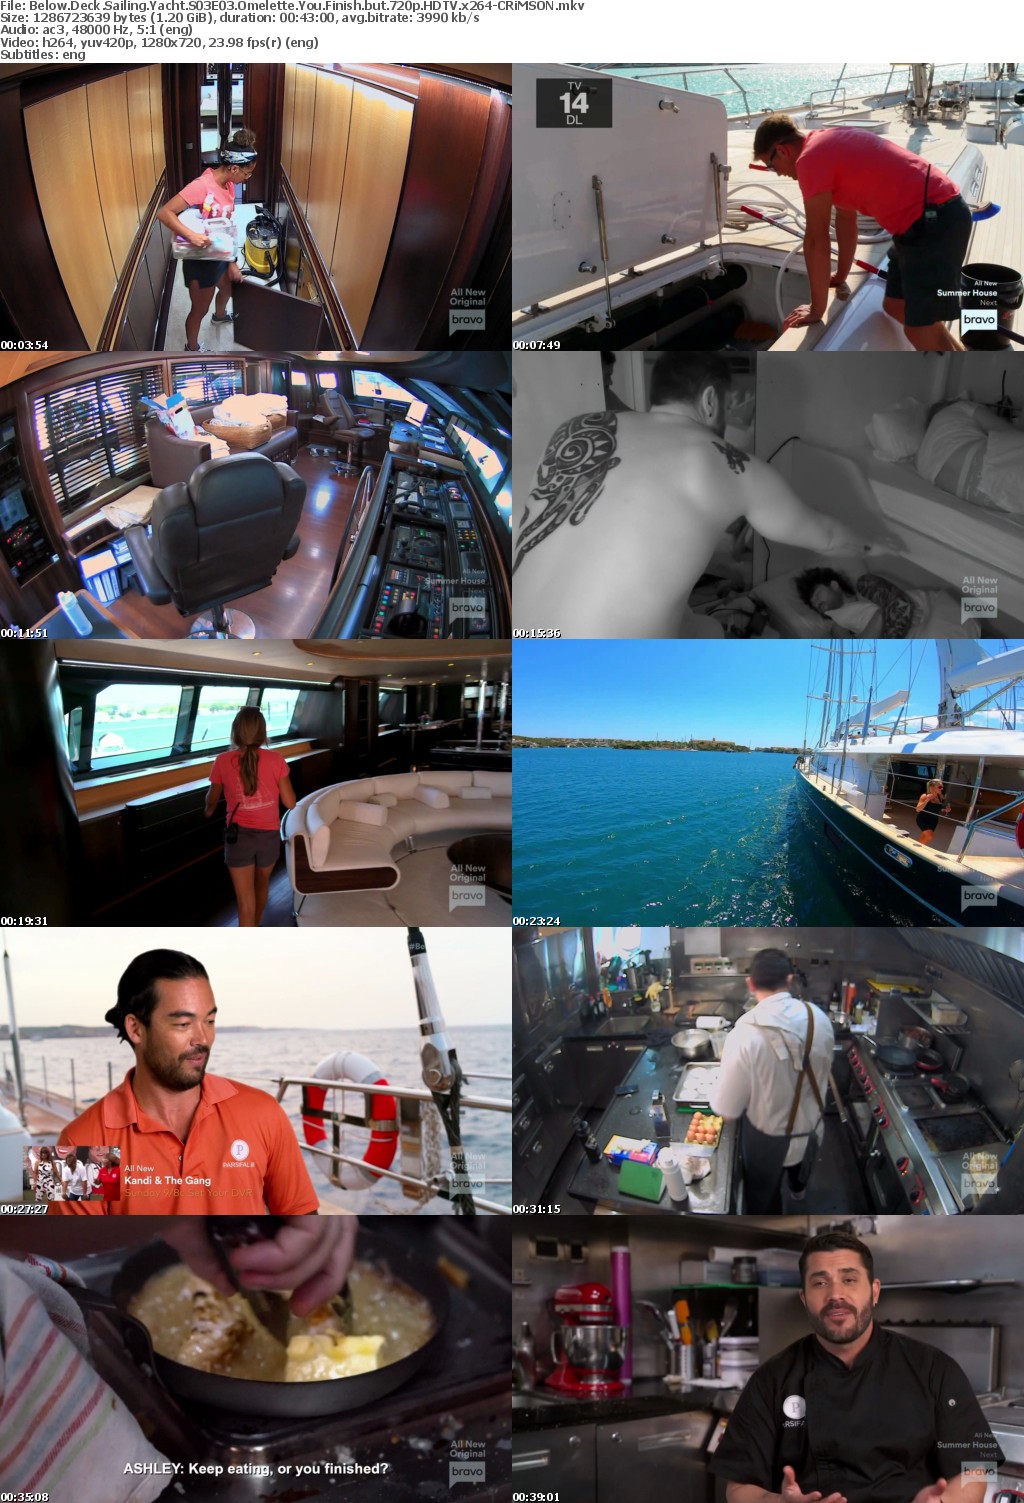 Below Deck Sailing Yacht S03E03 Omelette You Finish but 720p HDTV x264-CRiMSON